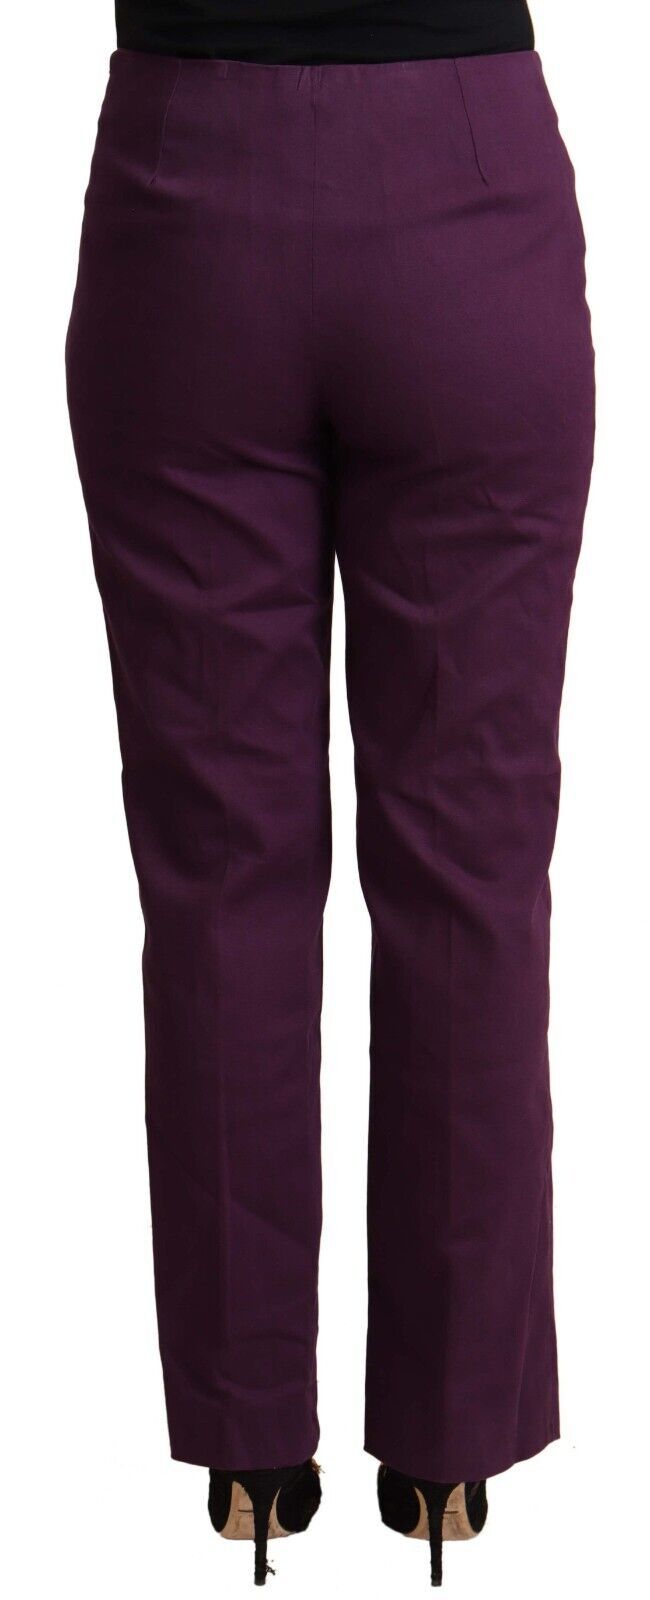 BENCIVENGA Elegant Violet High Waist Tapered Women's Pants